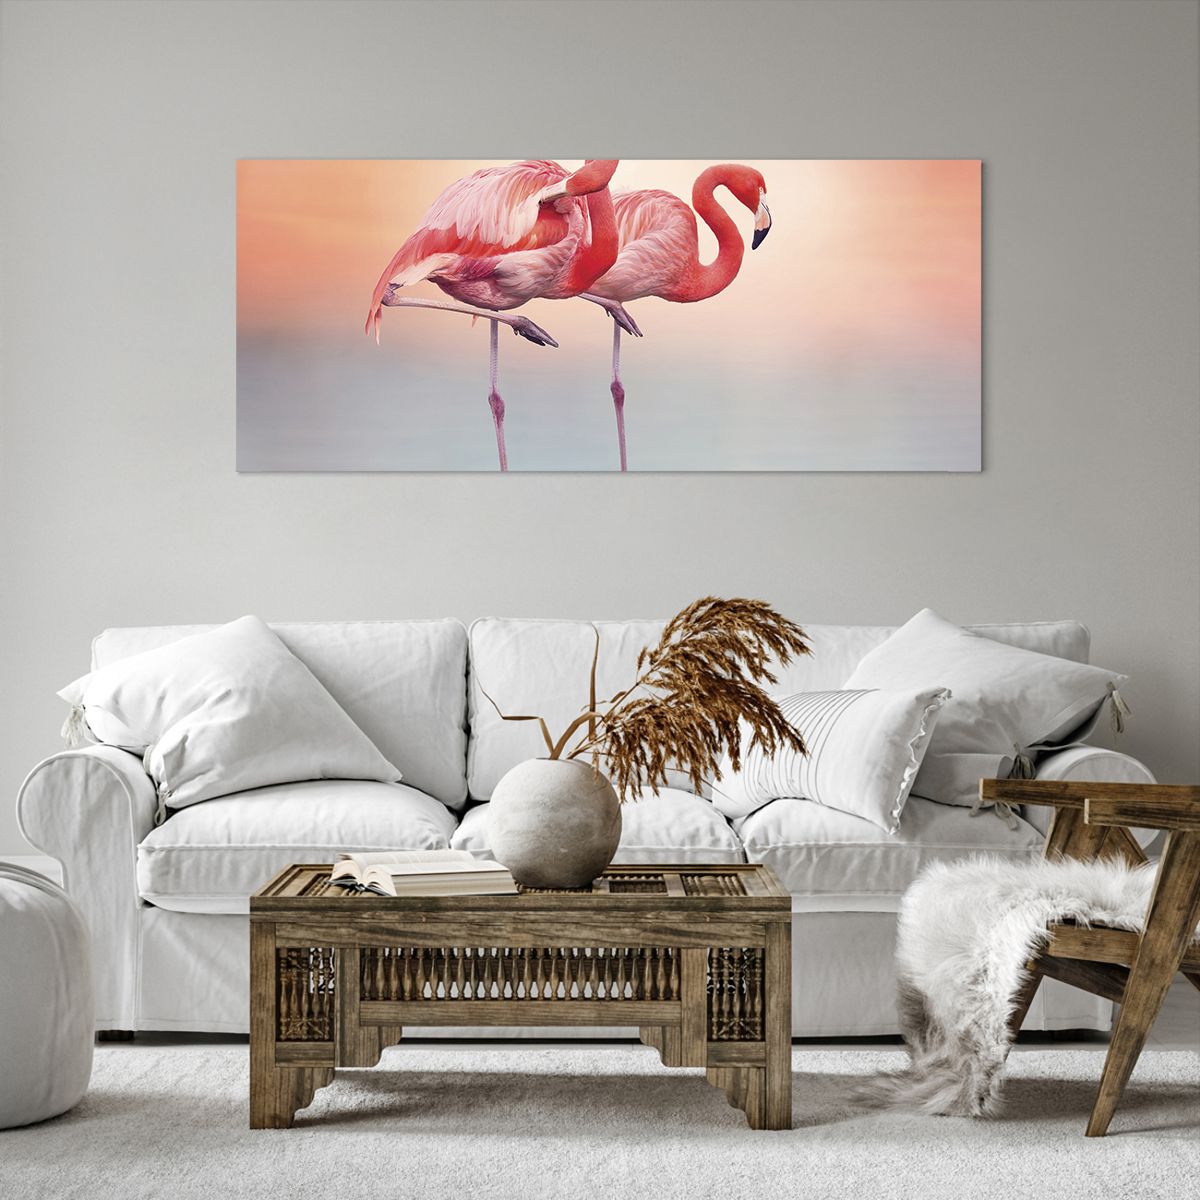 Bild auf Leinwand Flamingos, Bild auf Leinwand Die Vögel, Bild auf Leinwand Natur, Bild auf Leinwand Tiere, Bild auf Leinwand Pastellfarben